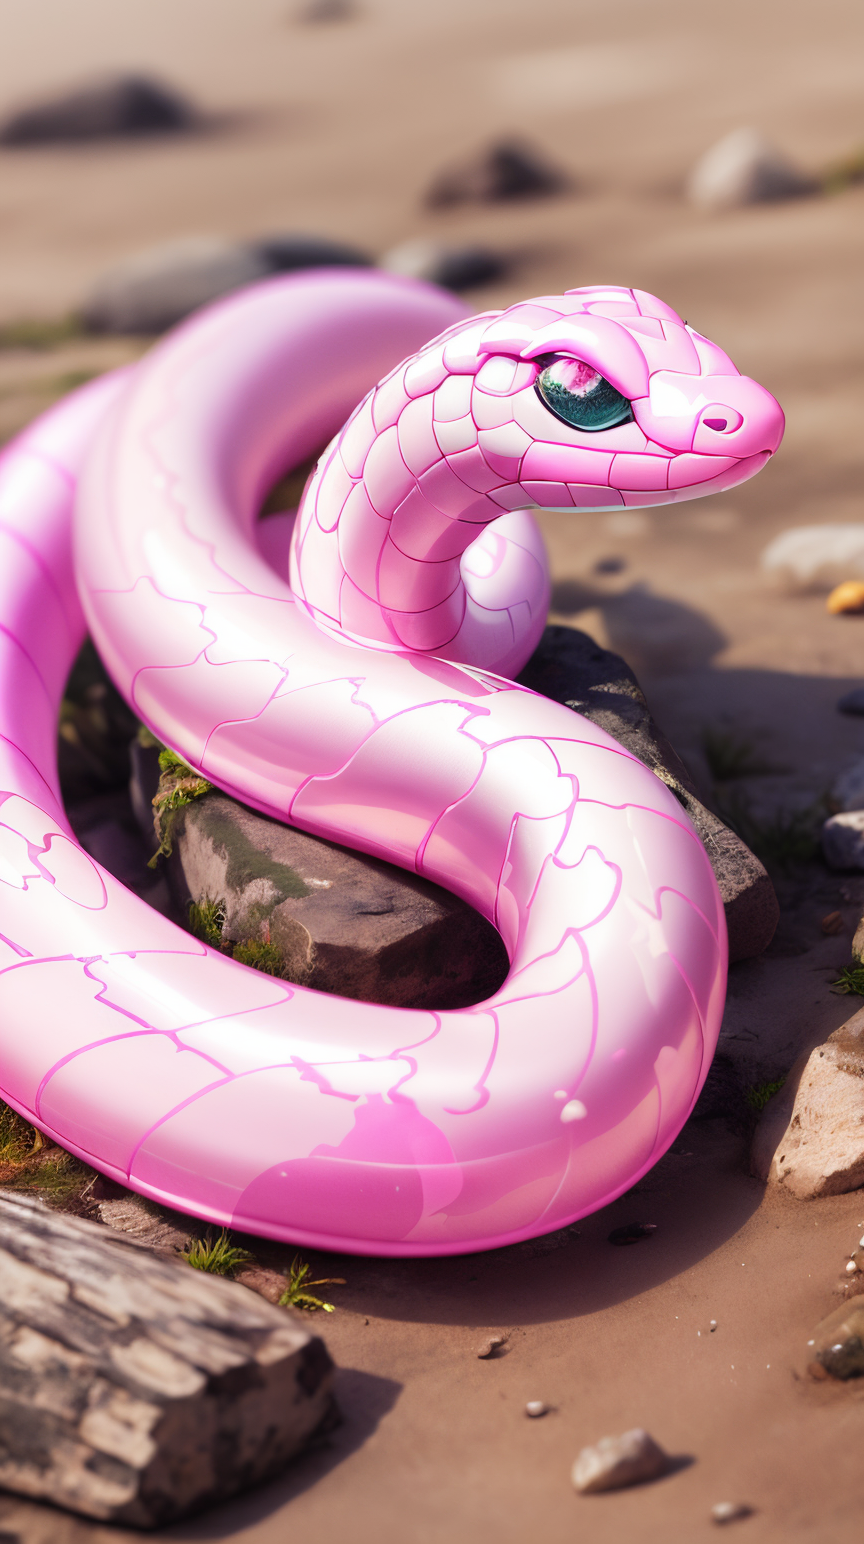 <lora:BarbieCore:0.8> BarbieCore snake, (shiny plastic:0.8), (pink and white:0.9), (pastel:0.85)